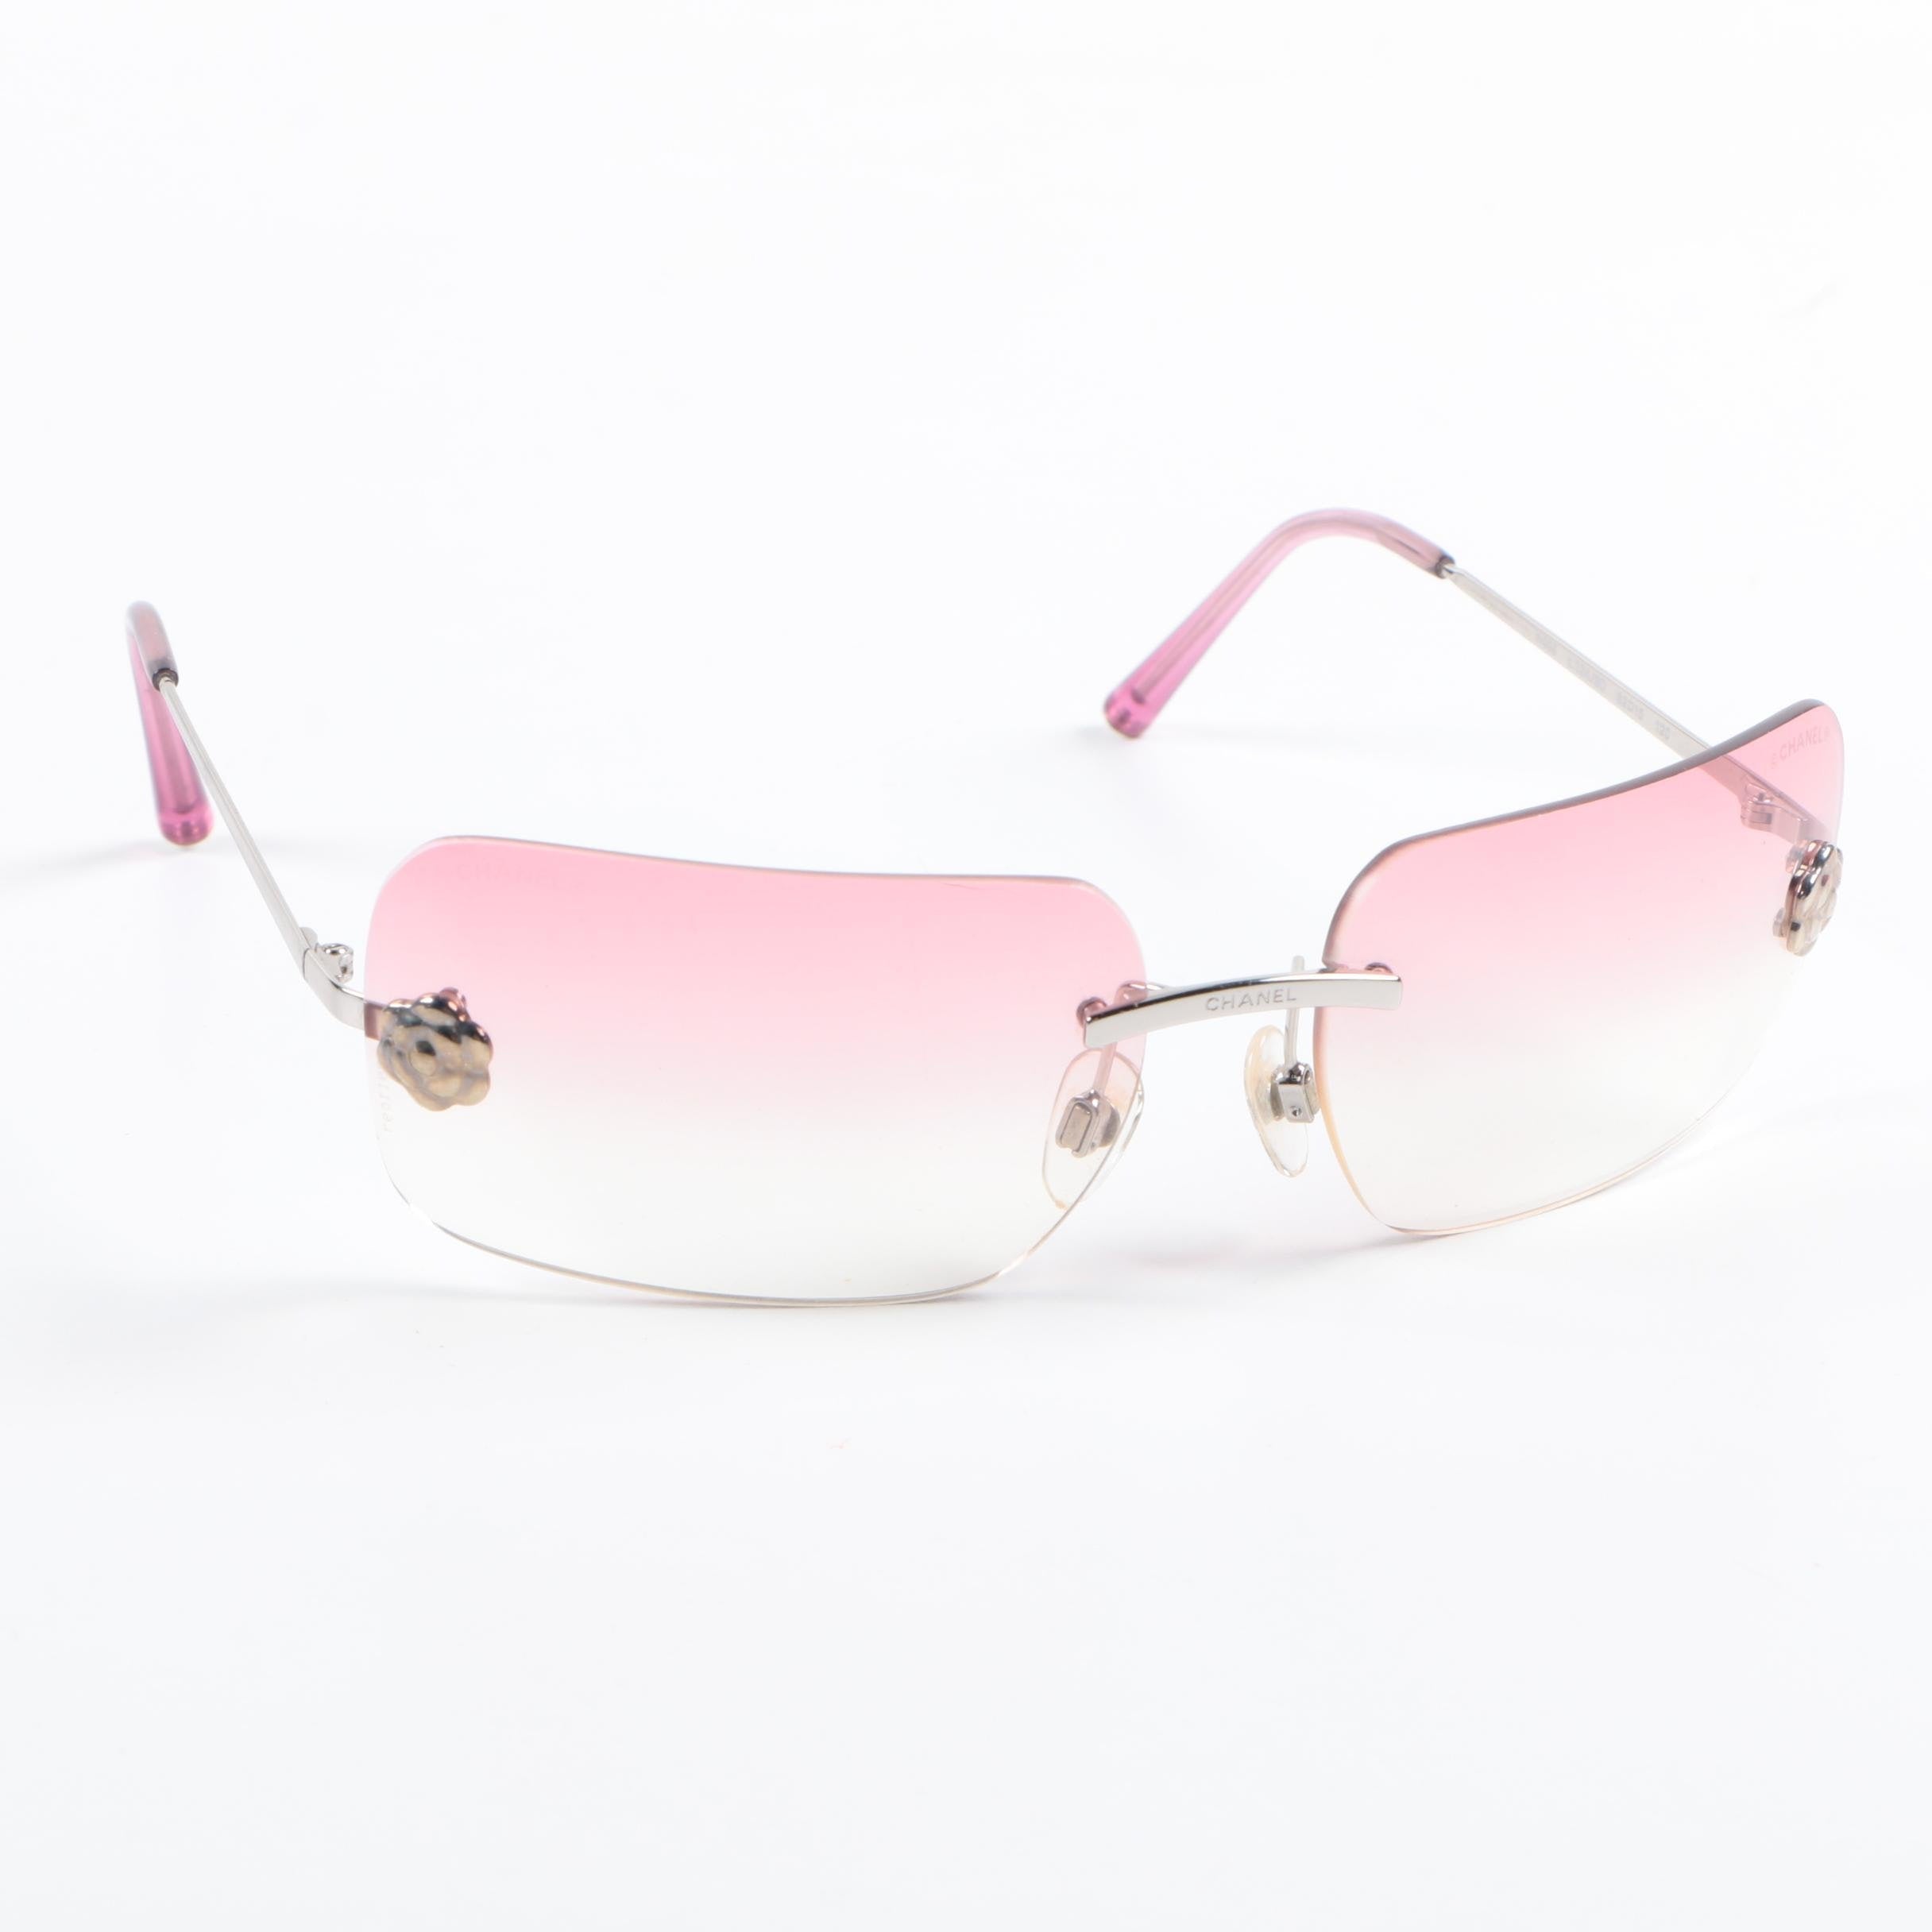 PRE-LOVED CHANEL NARROW Rx eyeglass FRAMES w/clamshell case